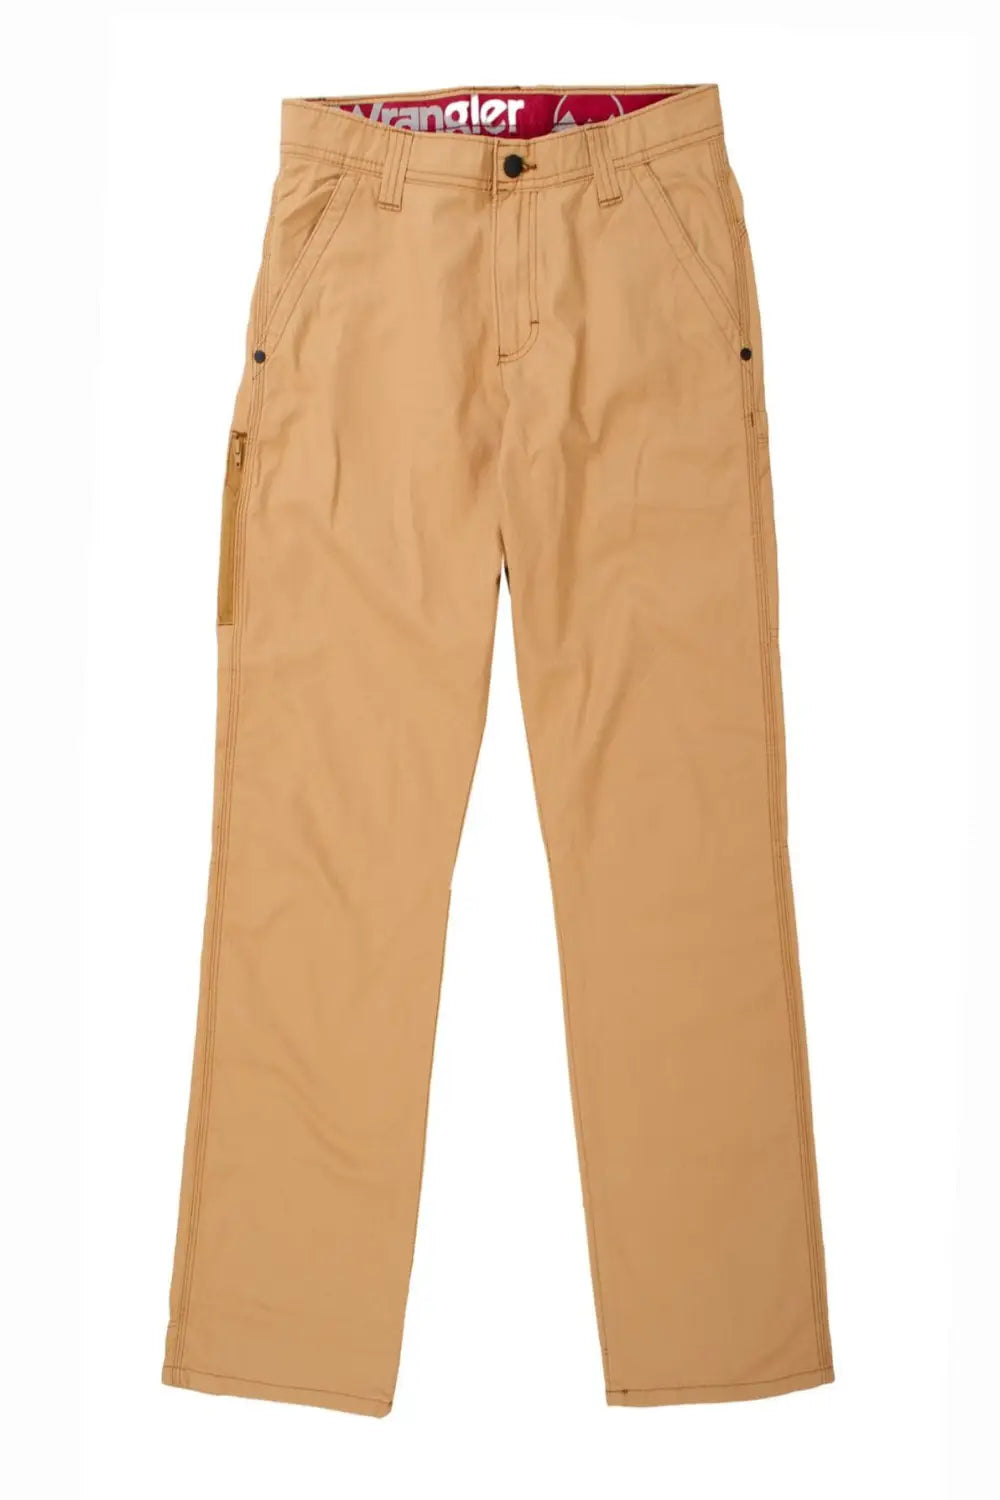 Wrangler Cargo Workwear Trousers